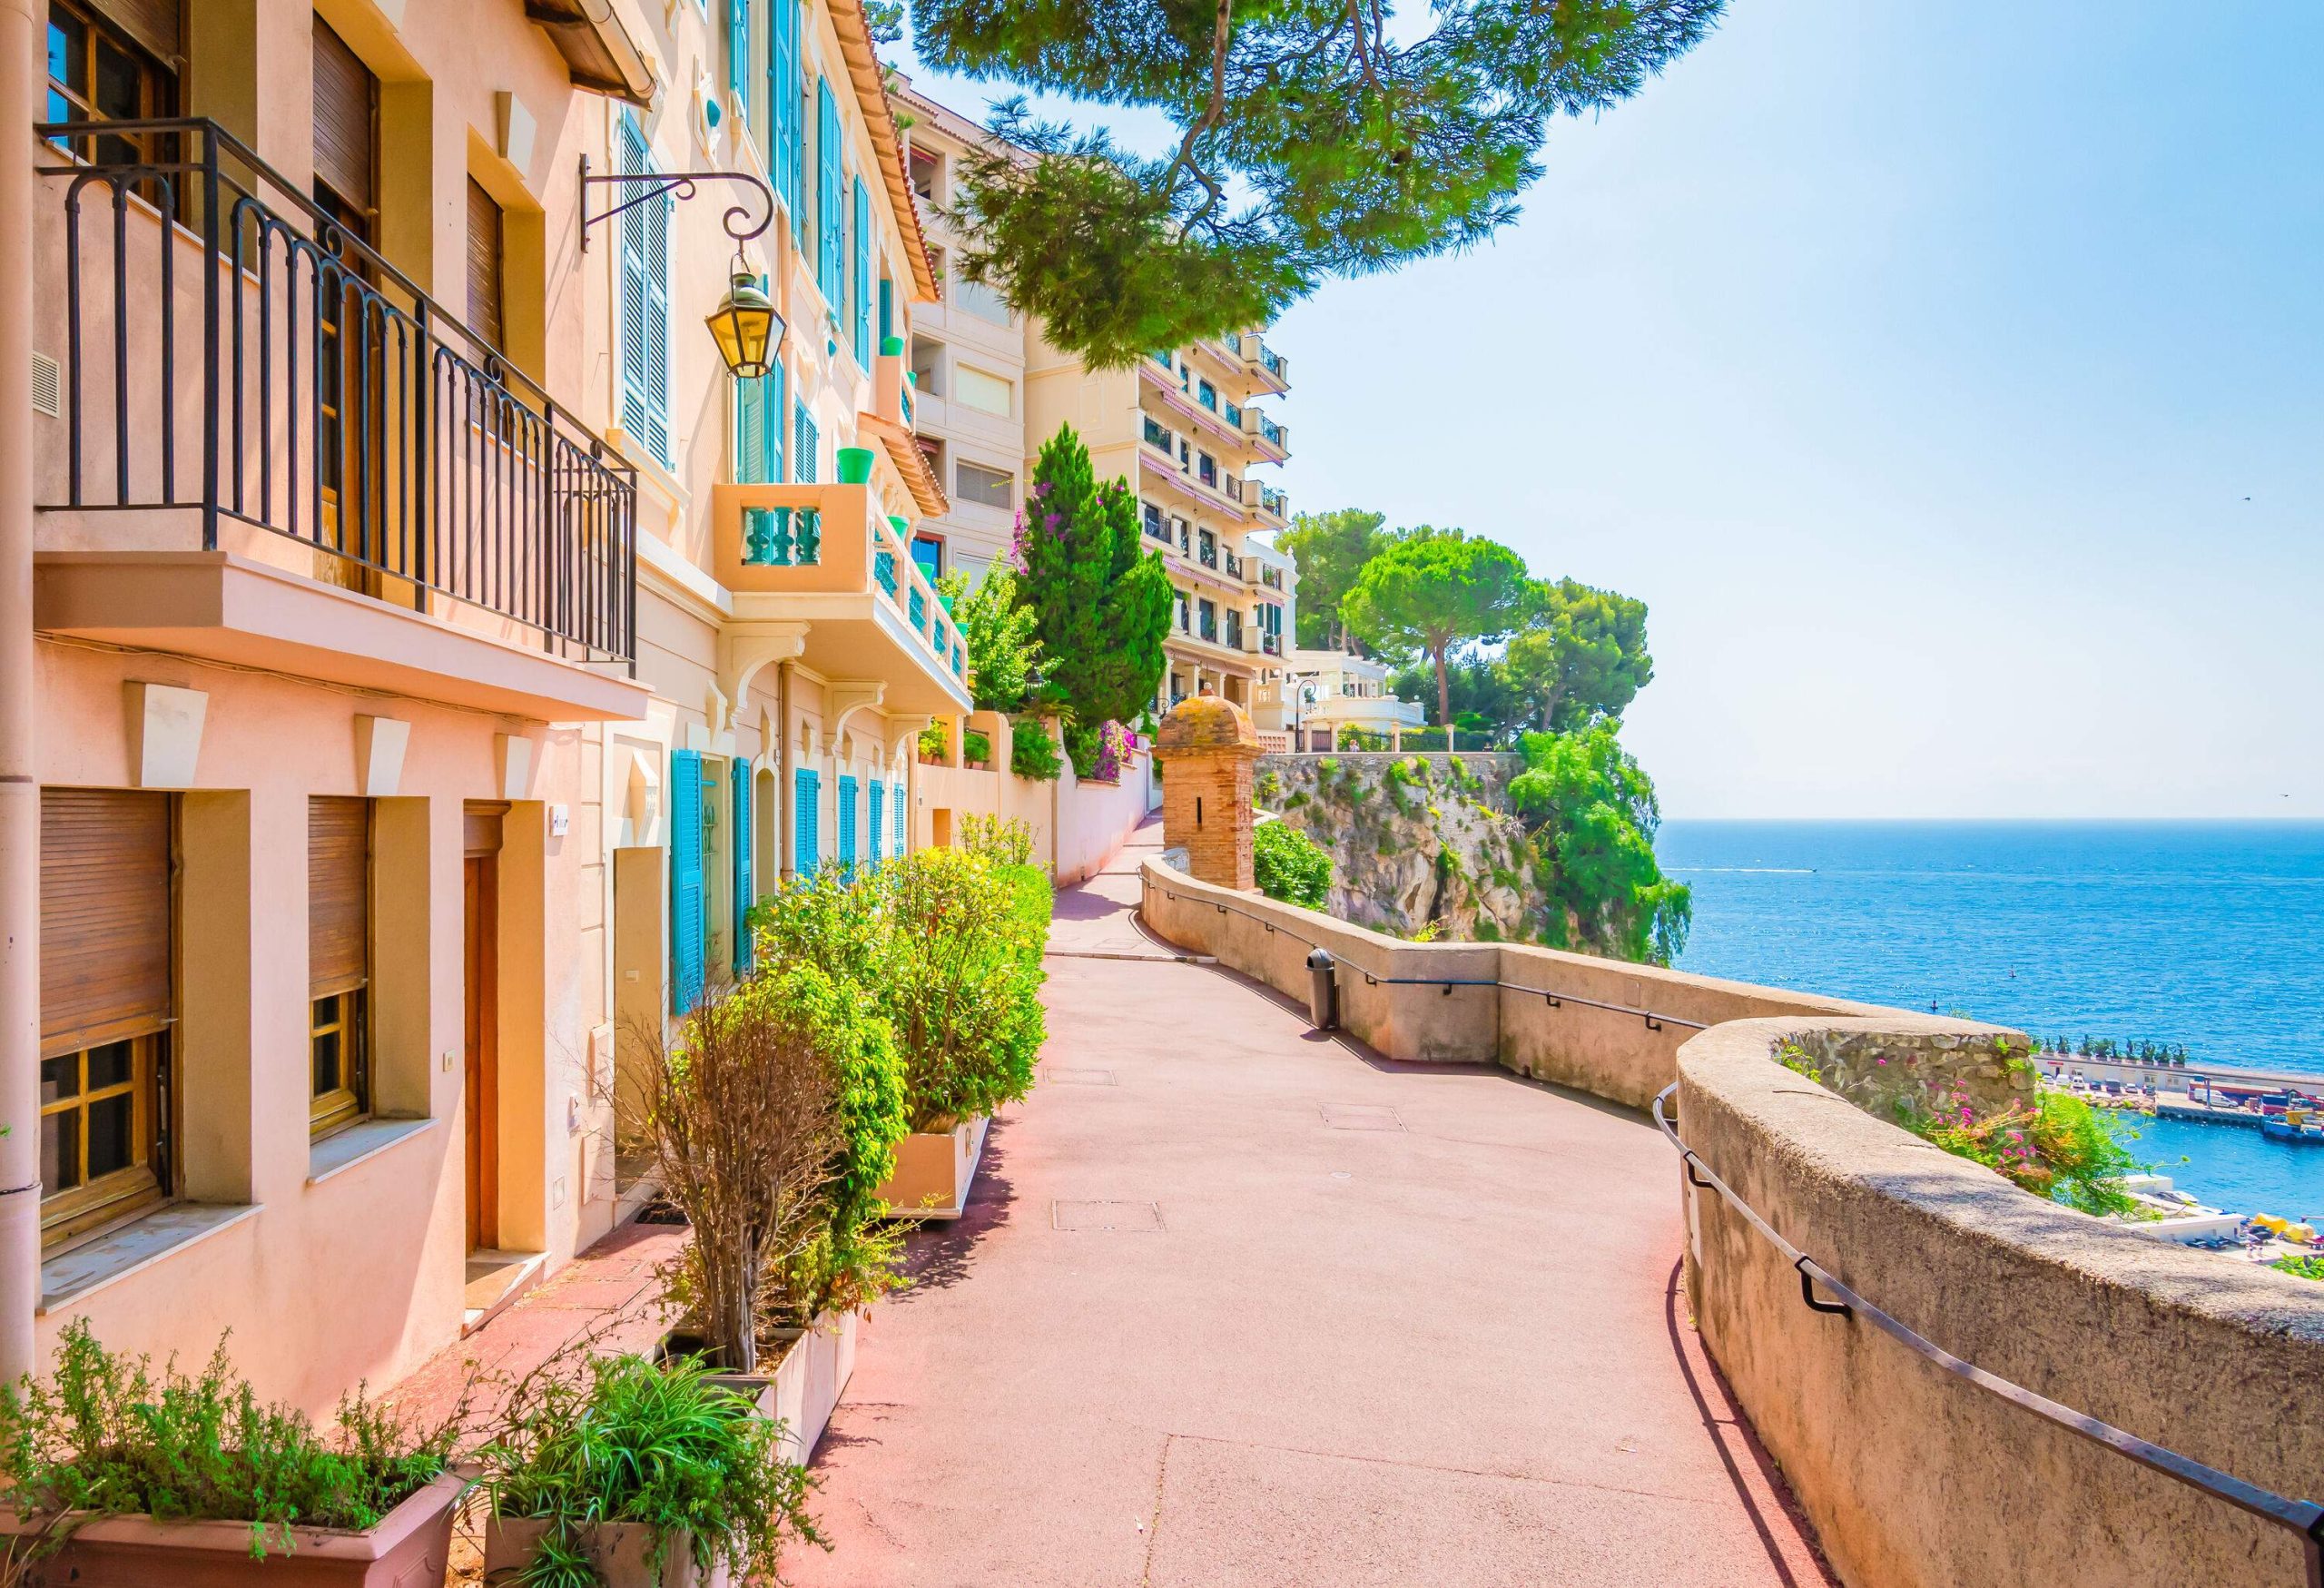 Attractive buildings along a narrow promenade overlooking the sea.